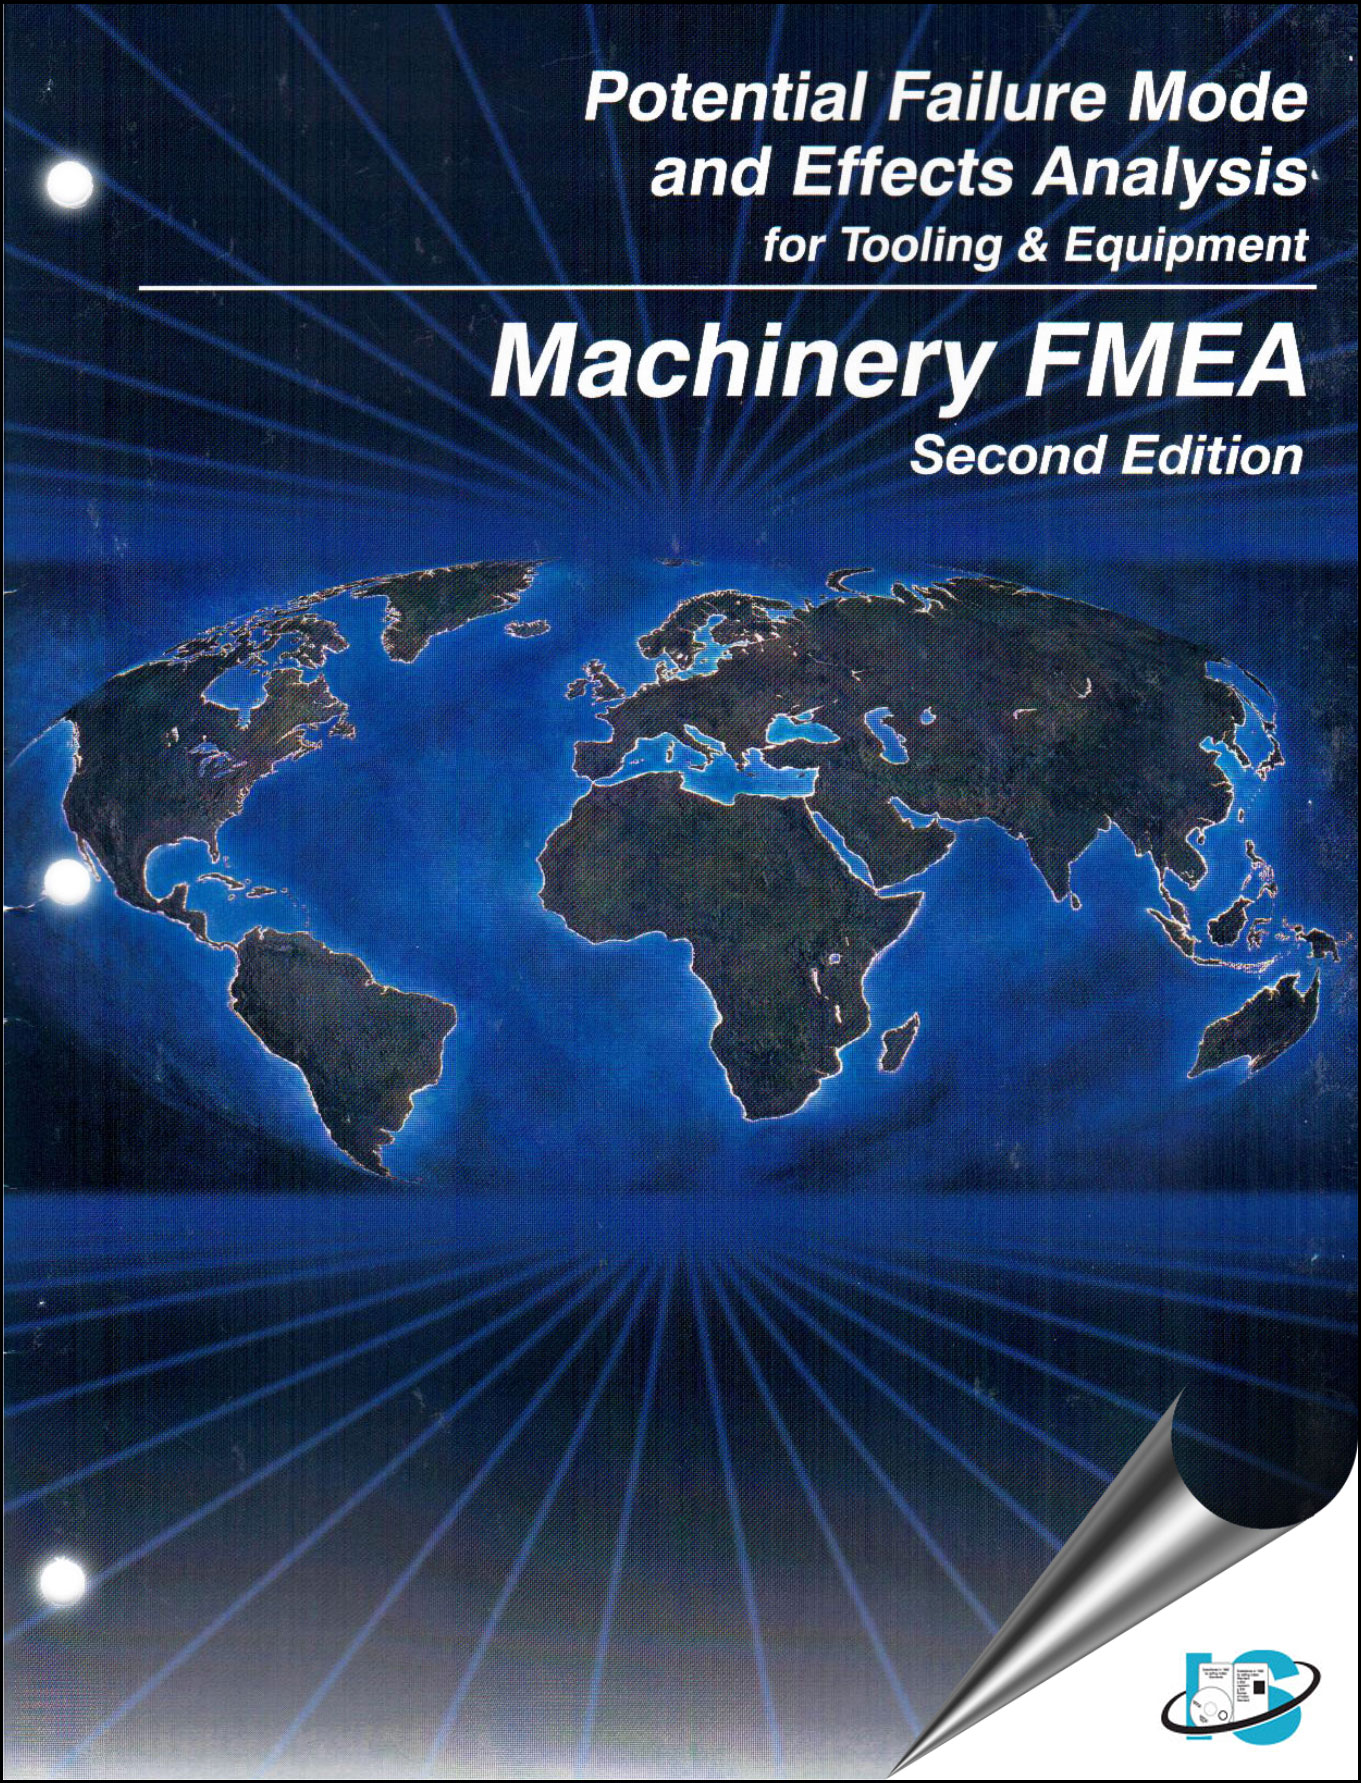 Ford fmea handbook download #5